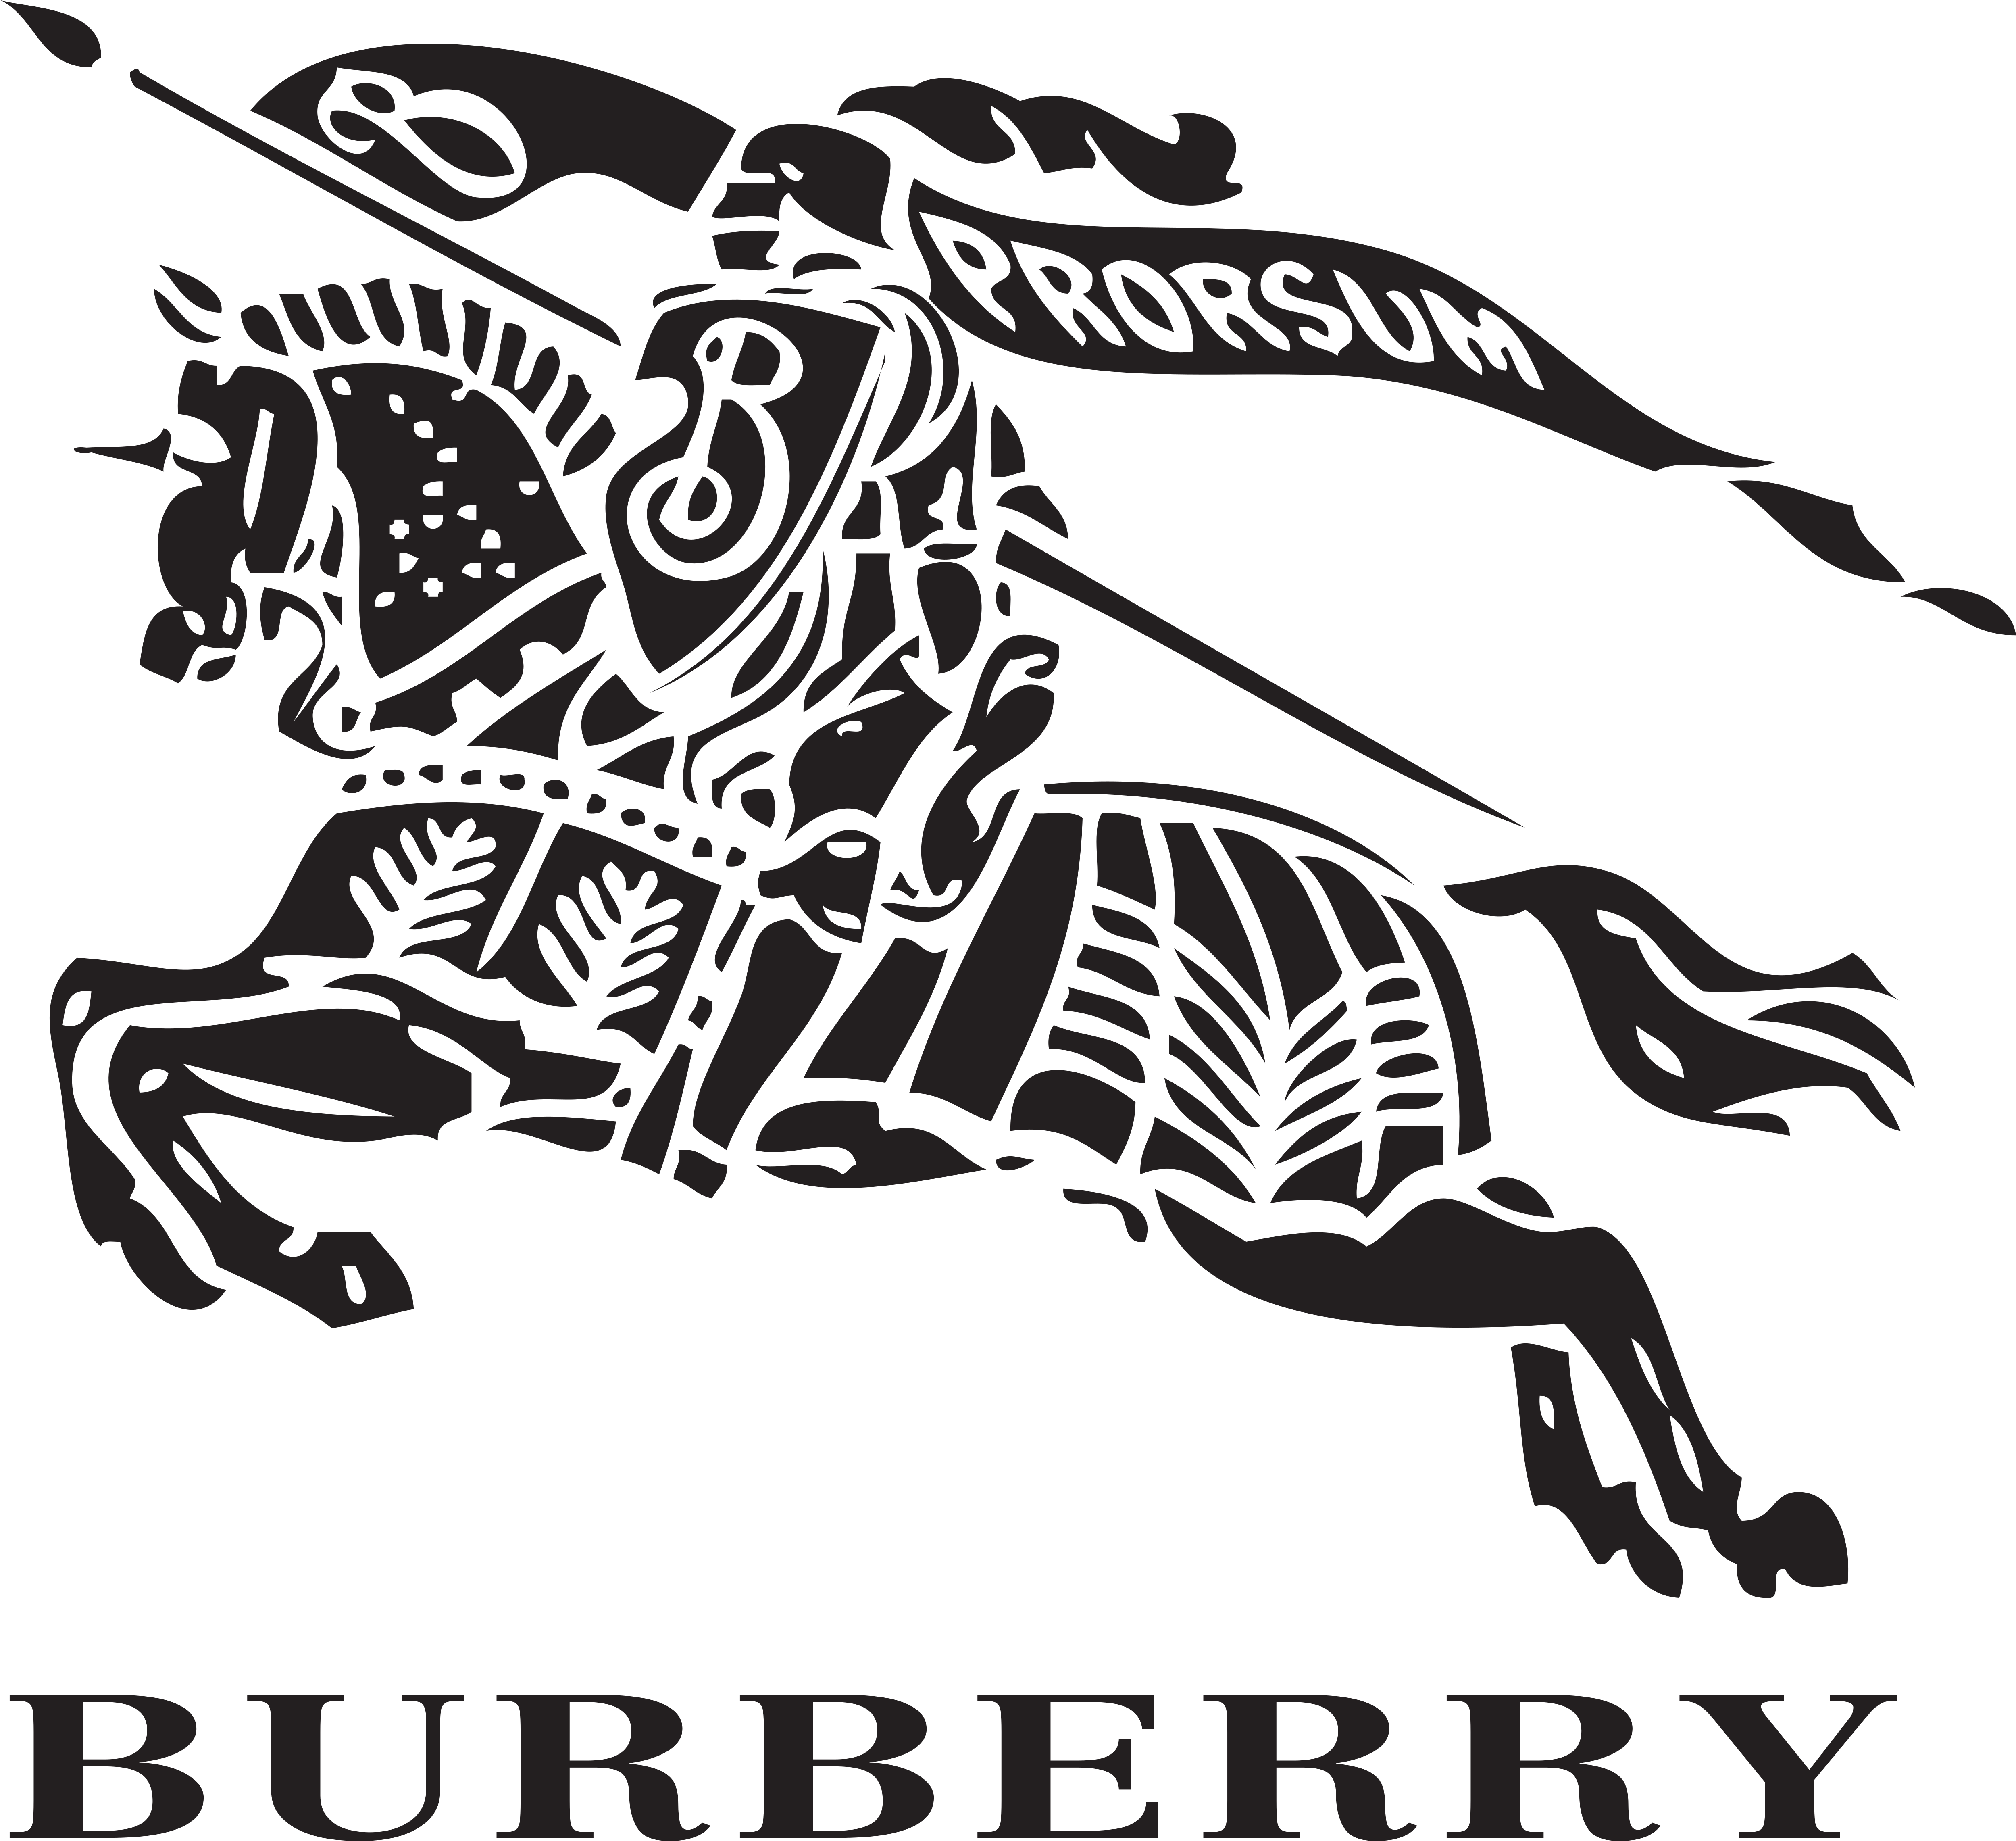 Burberry Logo Svg, Burberry Emblem Svg, Fashion Brand Svg Png ...